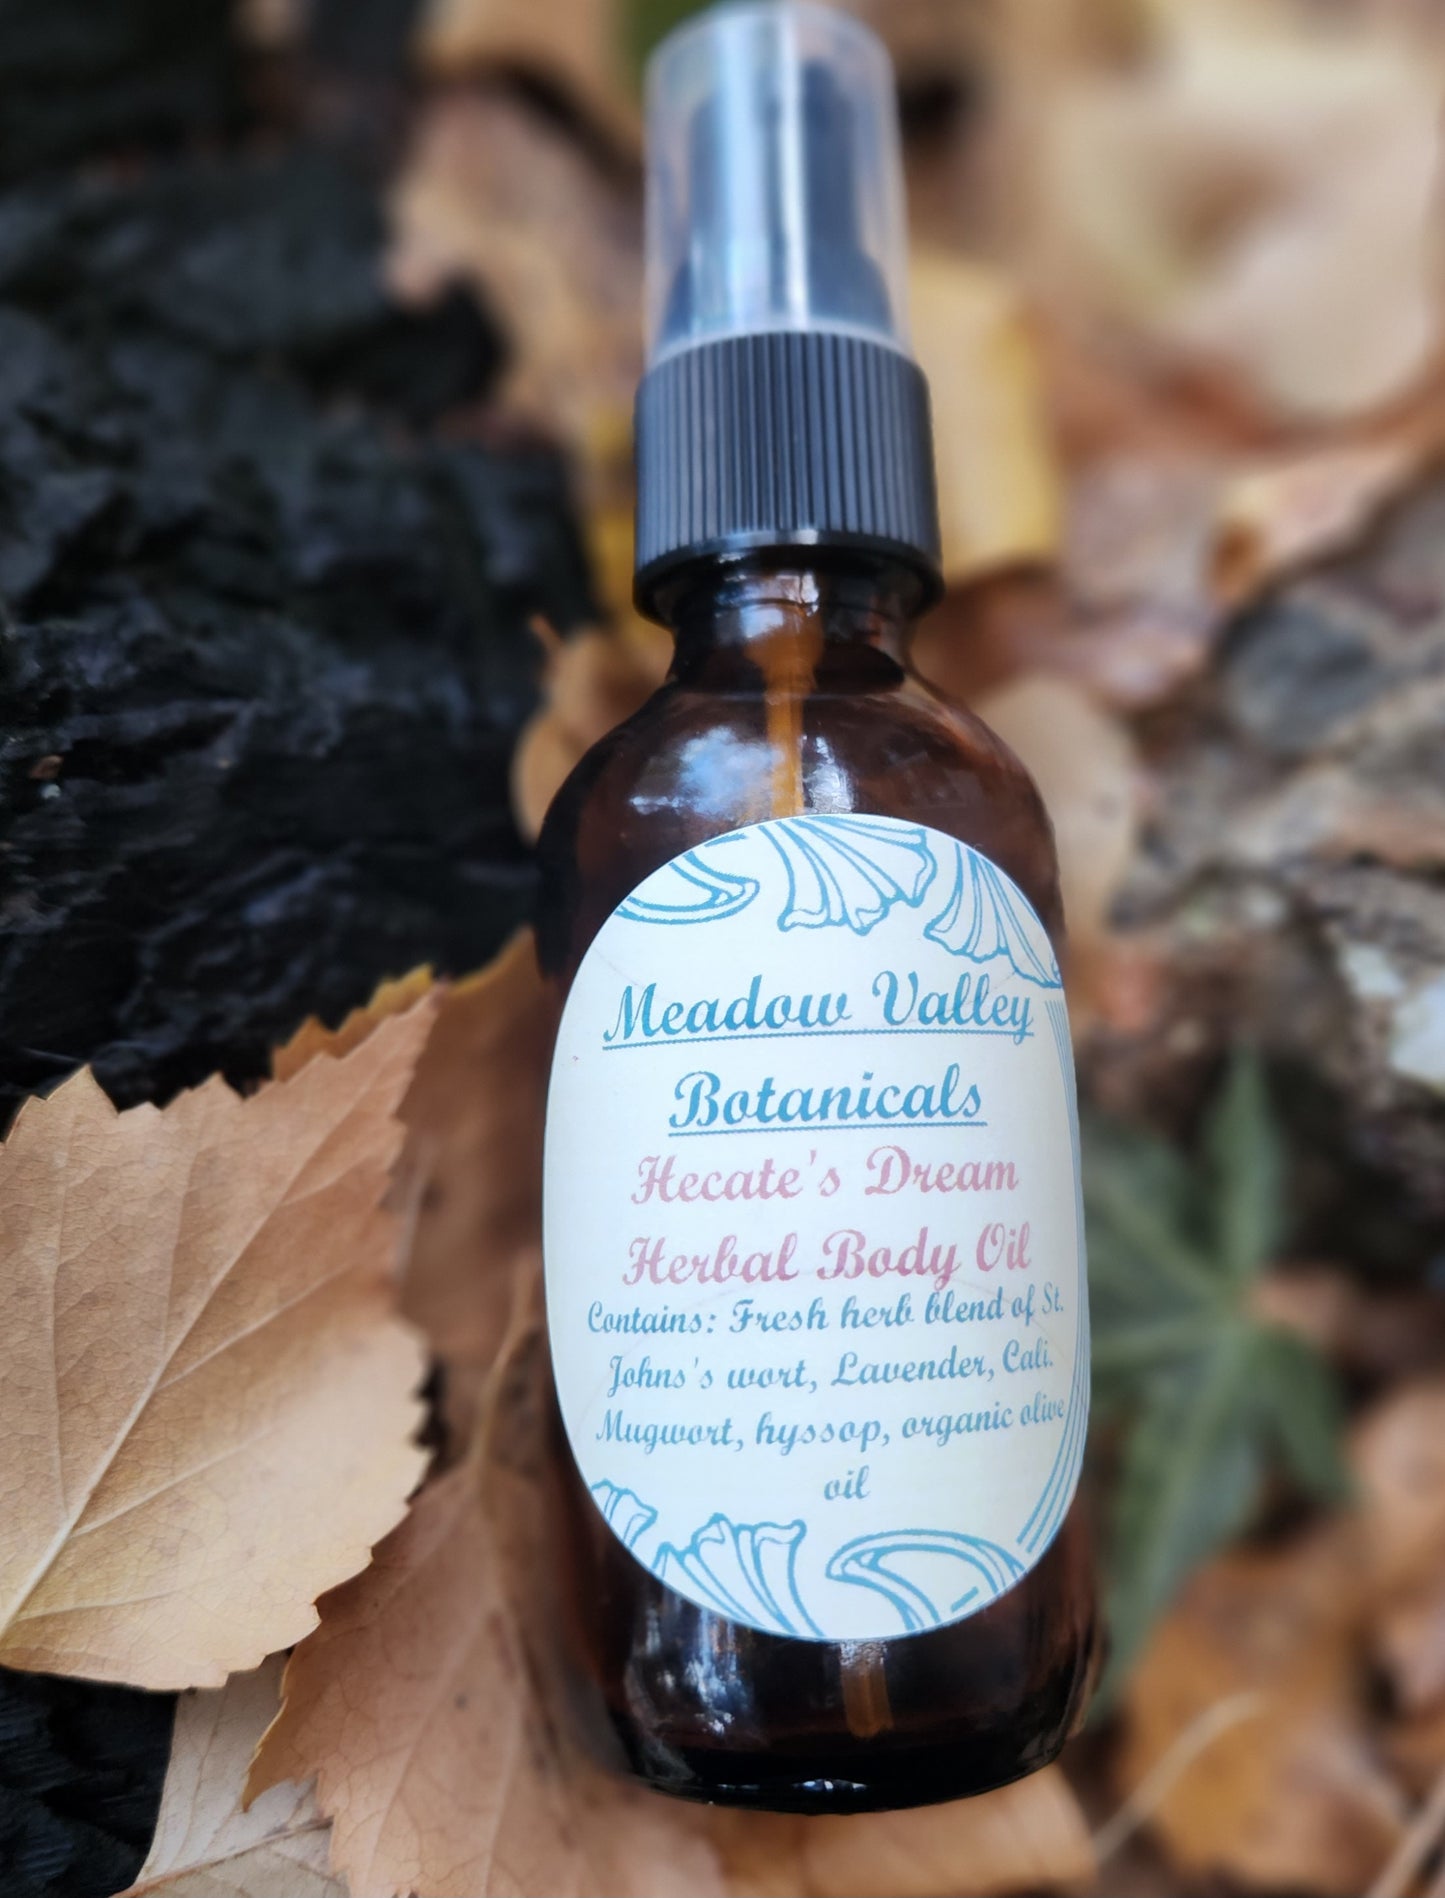 Hecate's Dream Herbal Body oil